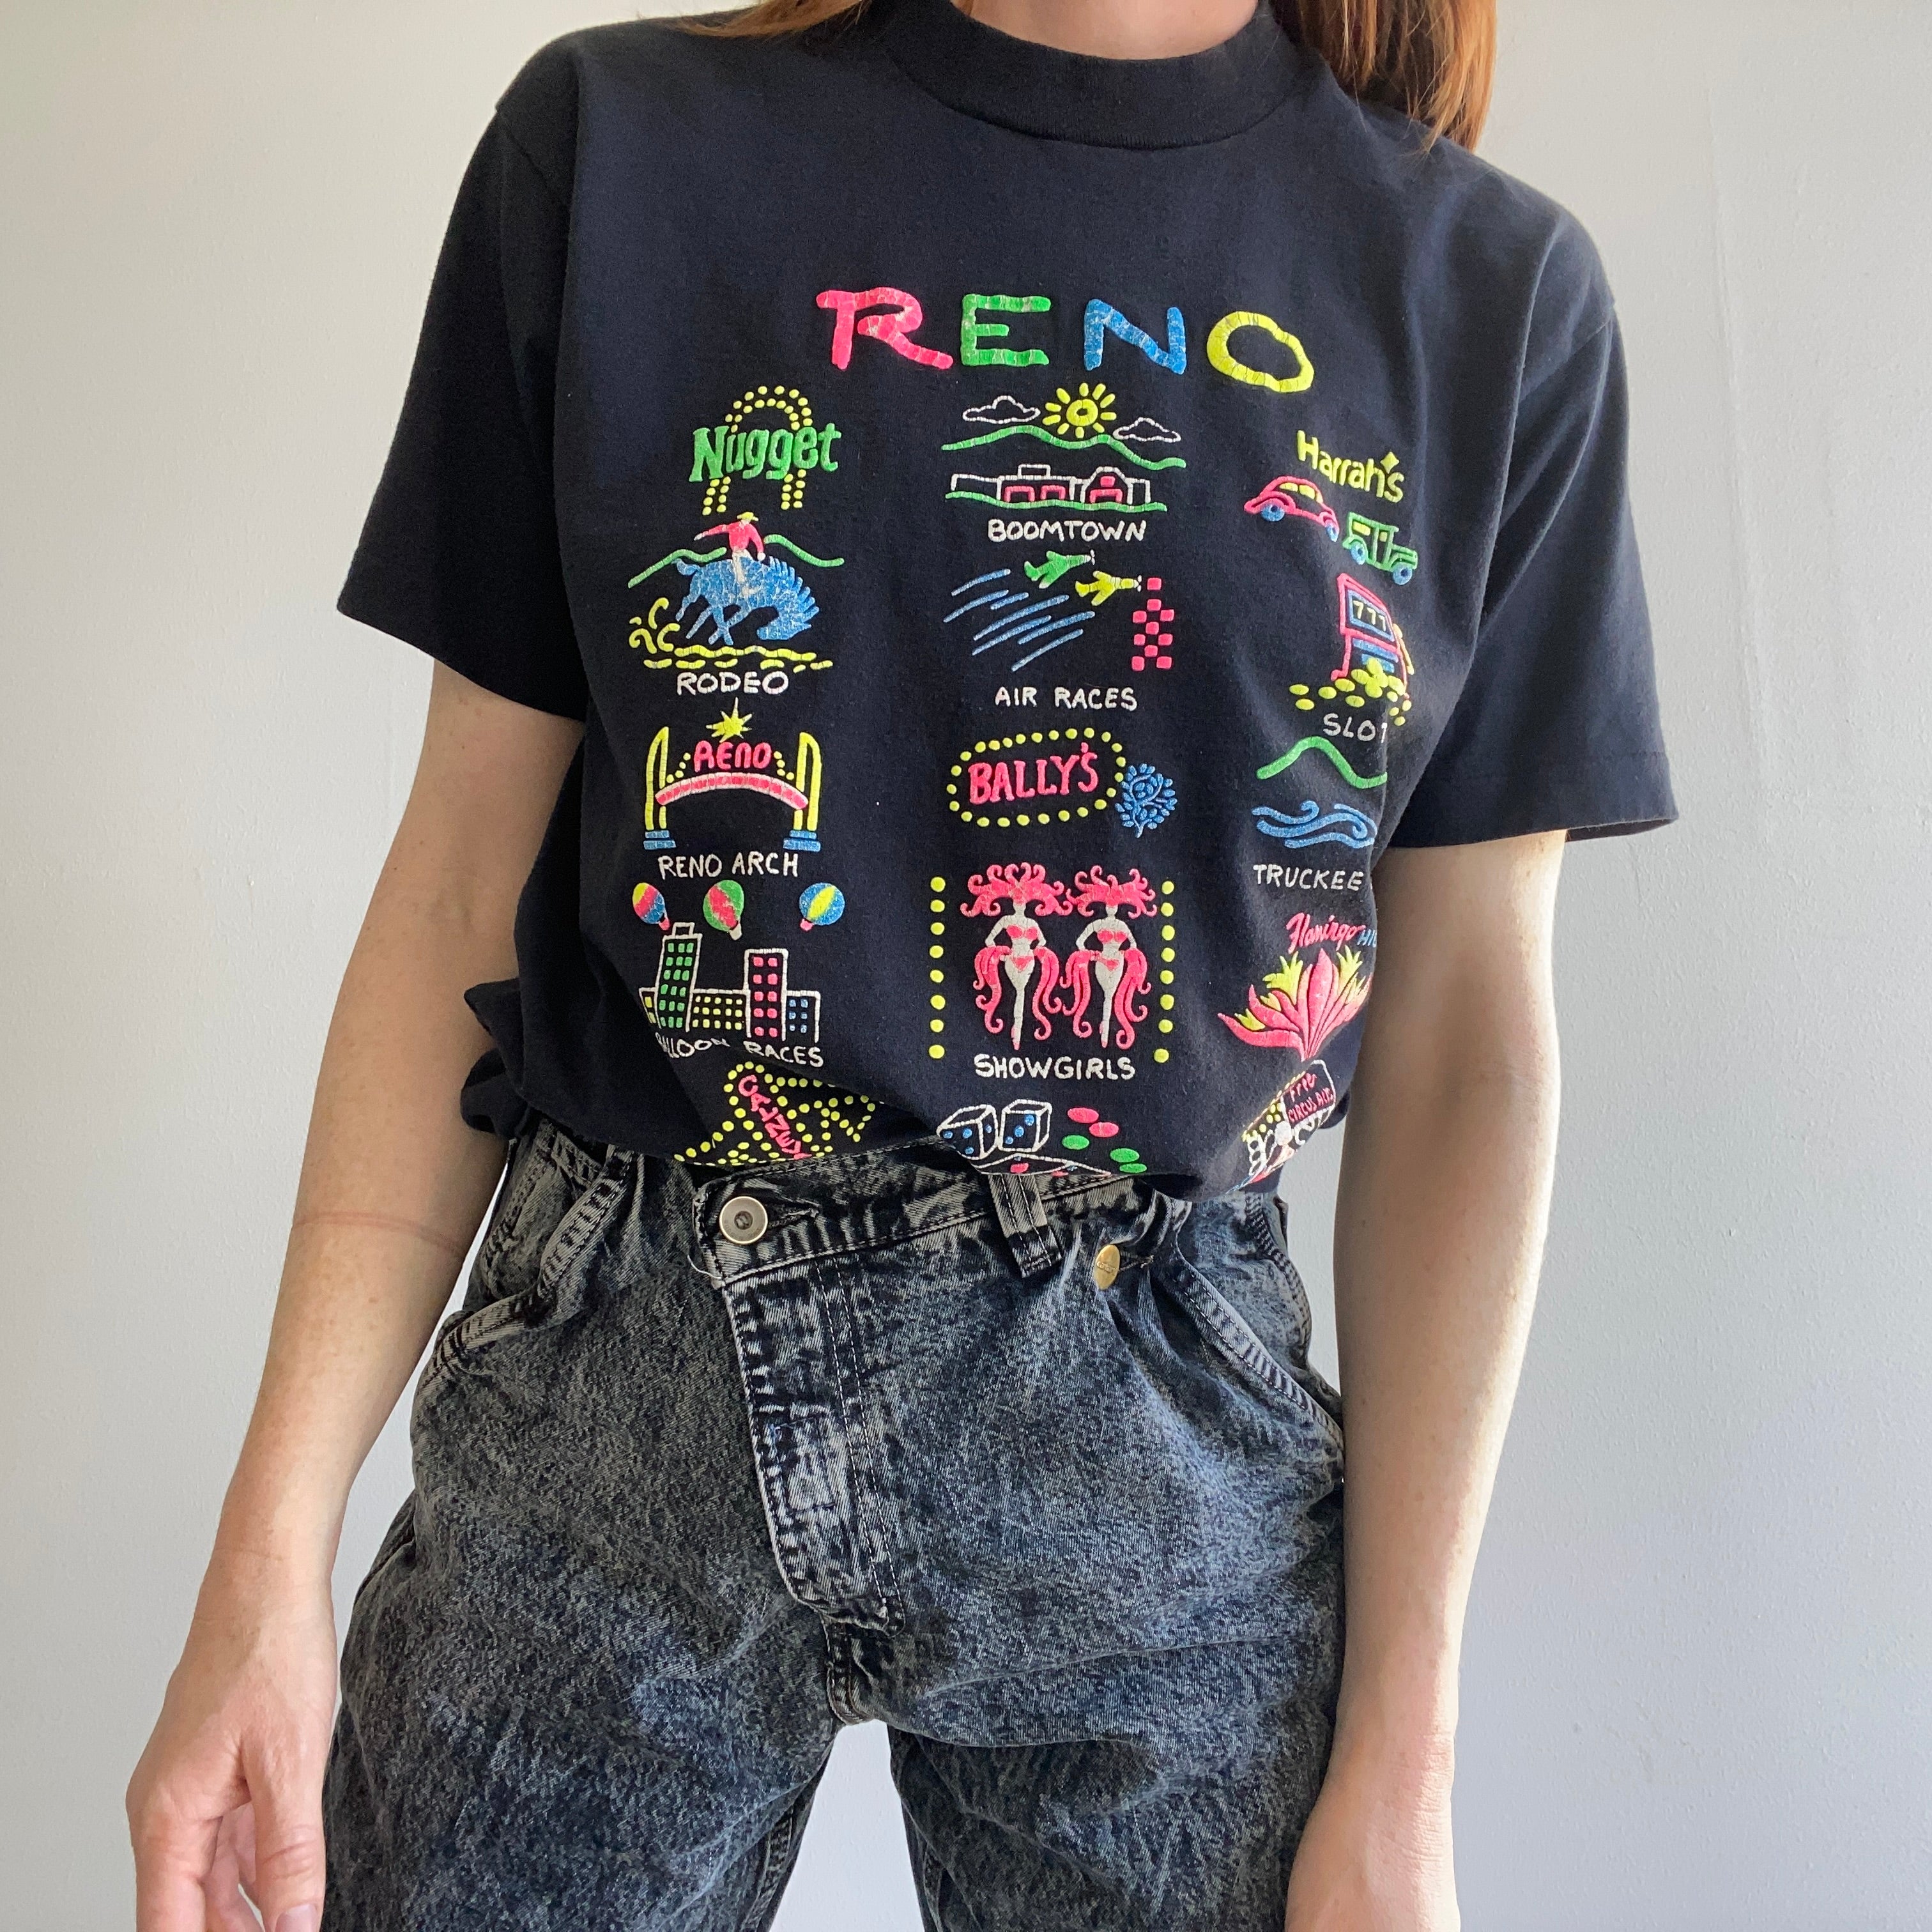 1990 Neon Reno Tourist T-Shirt par Screen Stars Best